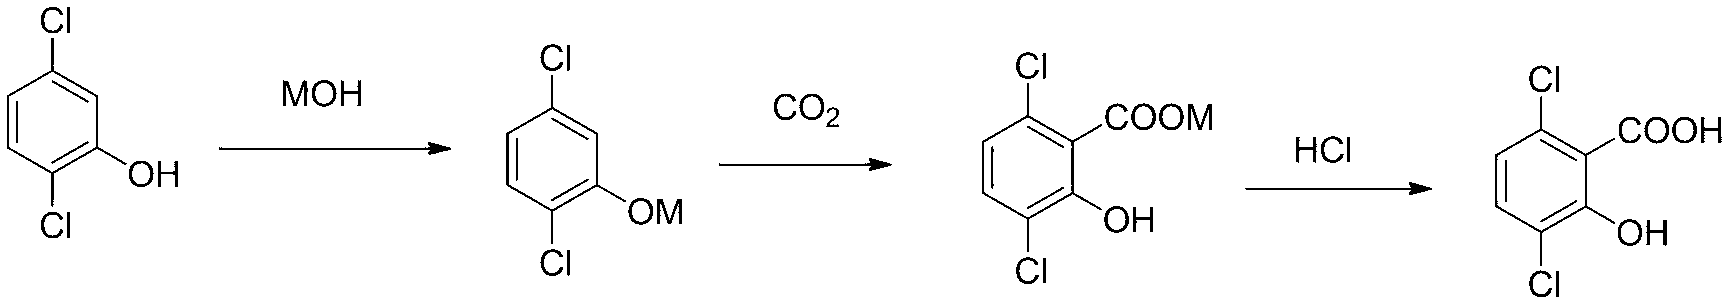 Preparation method of 3,6-dichloro-2-hydroxybenzoic acid